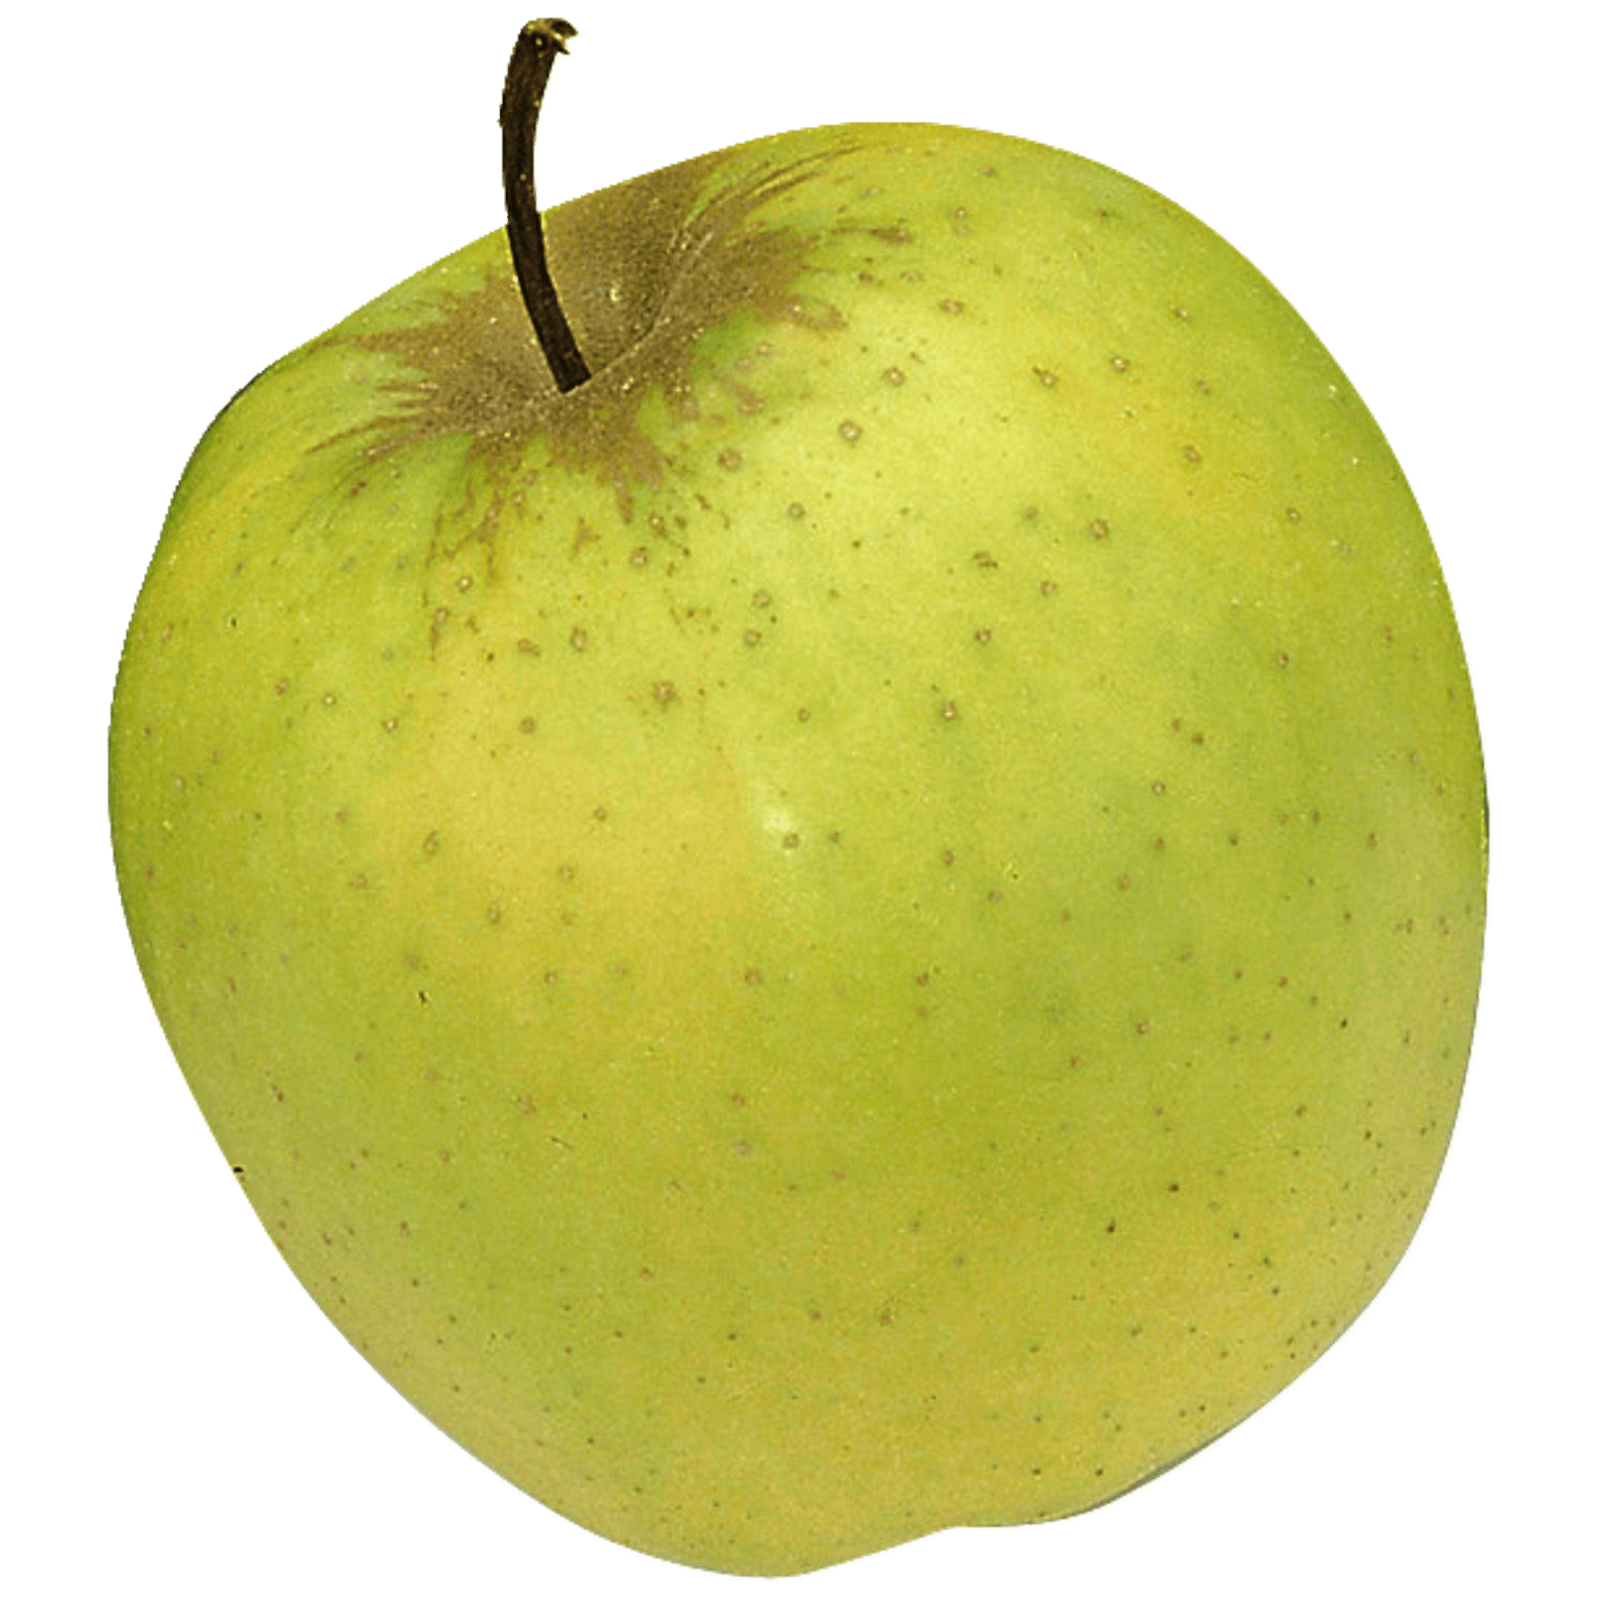 Gruner Apfel PNG - 168117